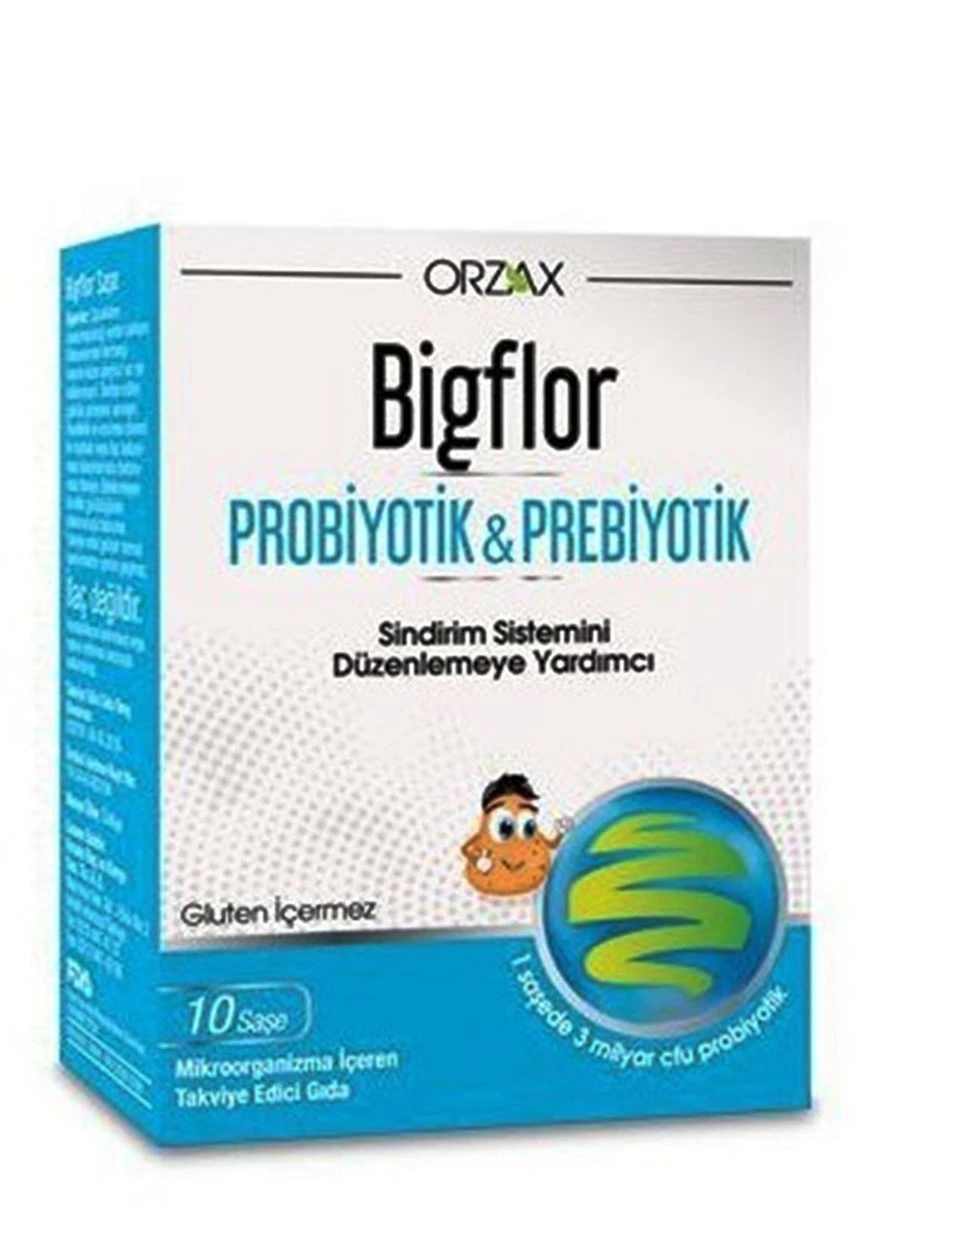 Orzax Bigflor 10 Saşe Probiotic & Prebiotic